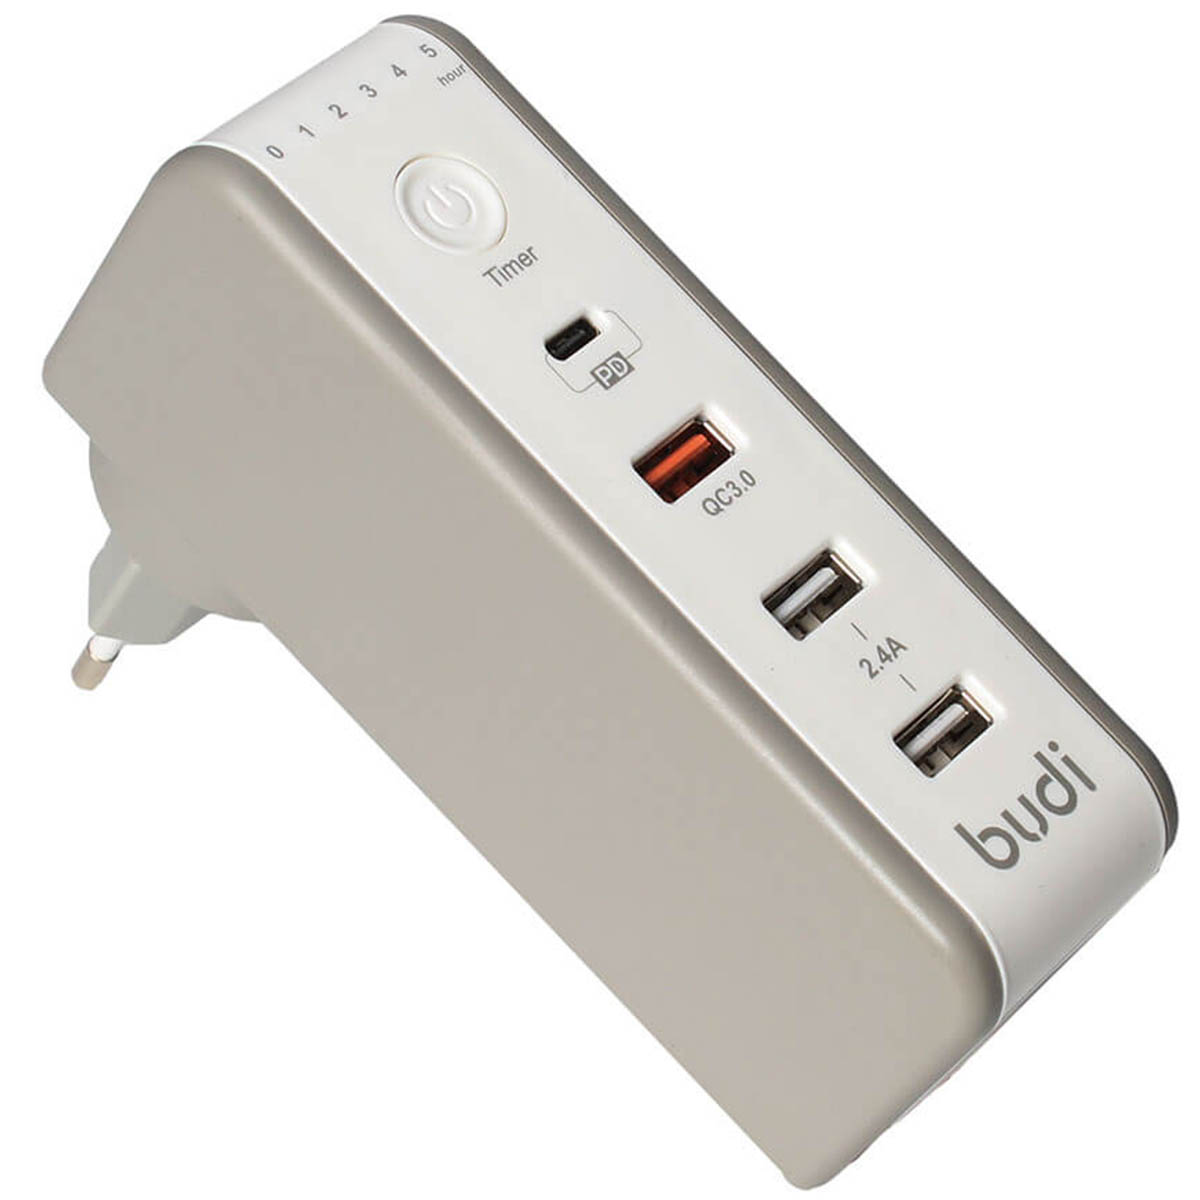 СЗУ (Сетевое зарядное устройство) BUDI M8J301TE, 3 USB, 1 Type-C, таймер отключения, цвет бежевый